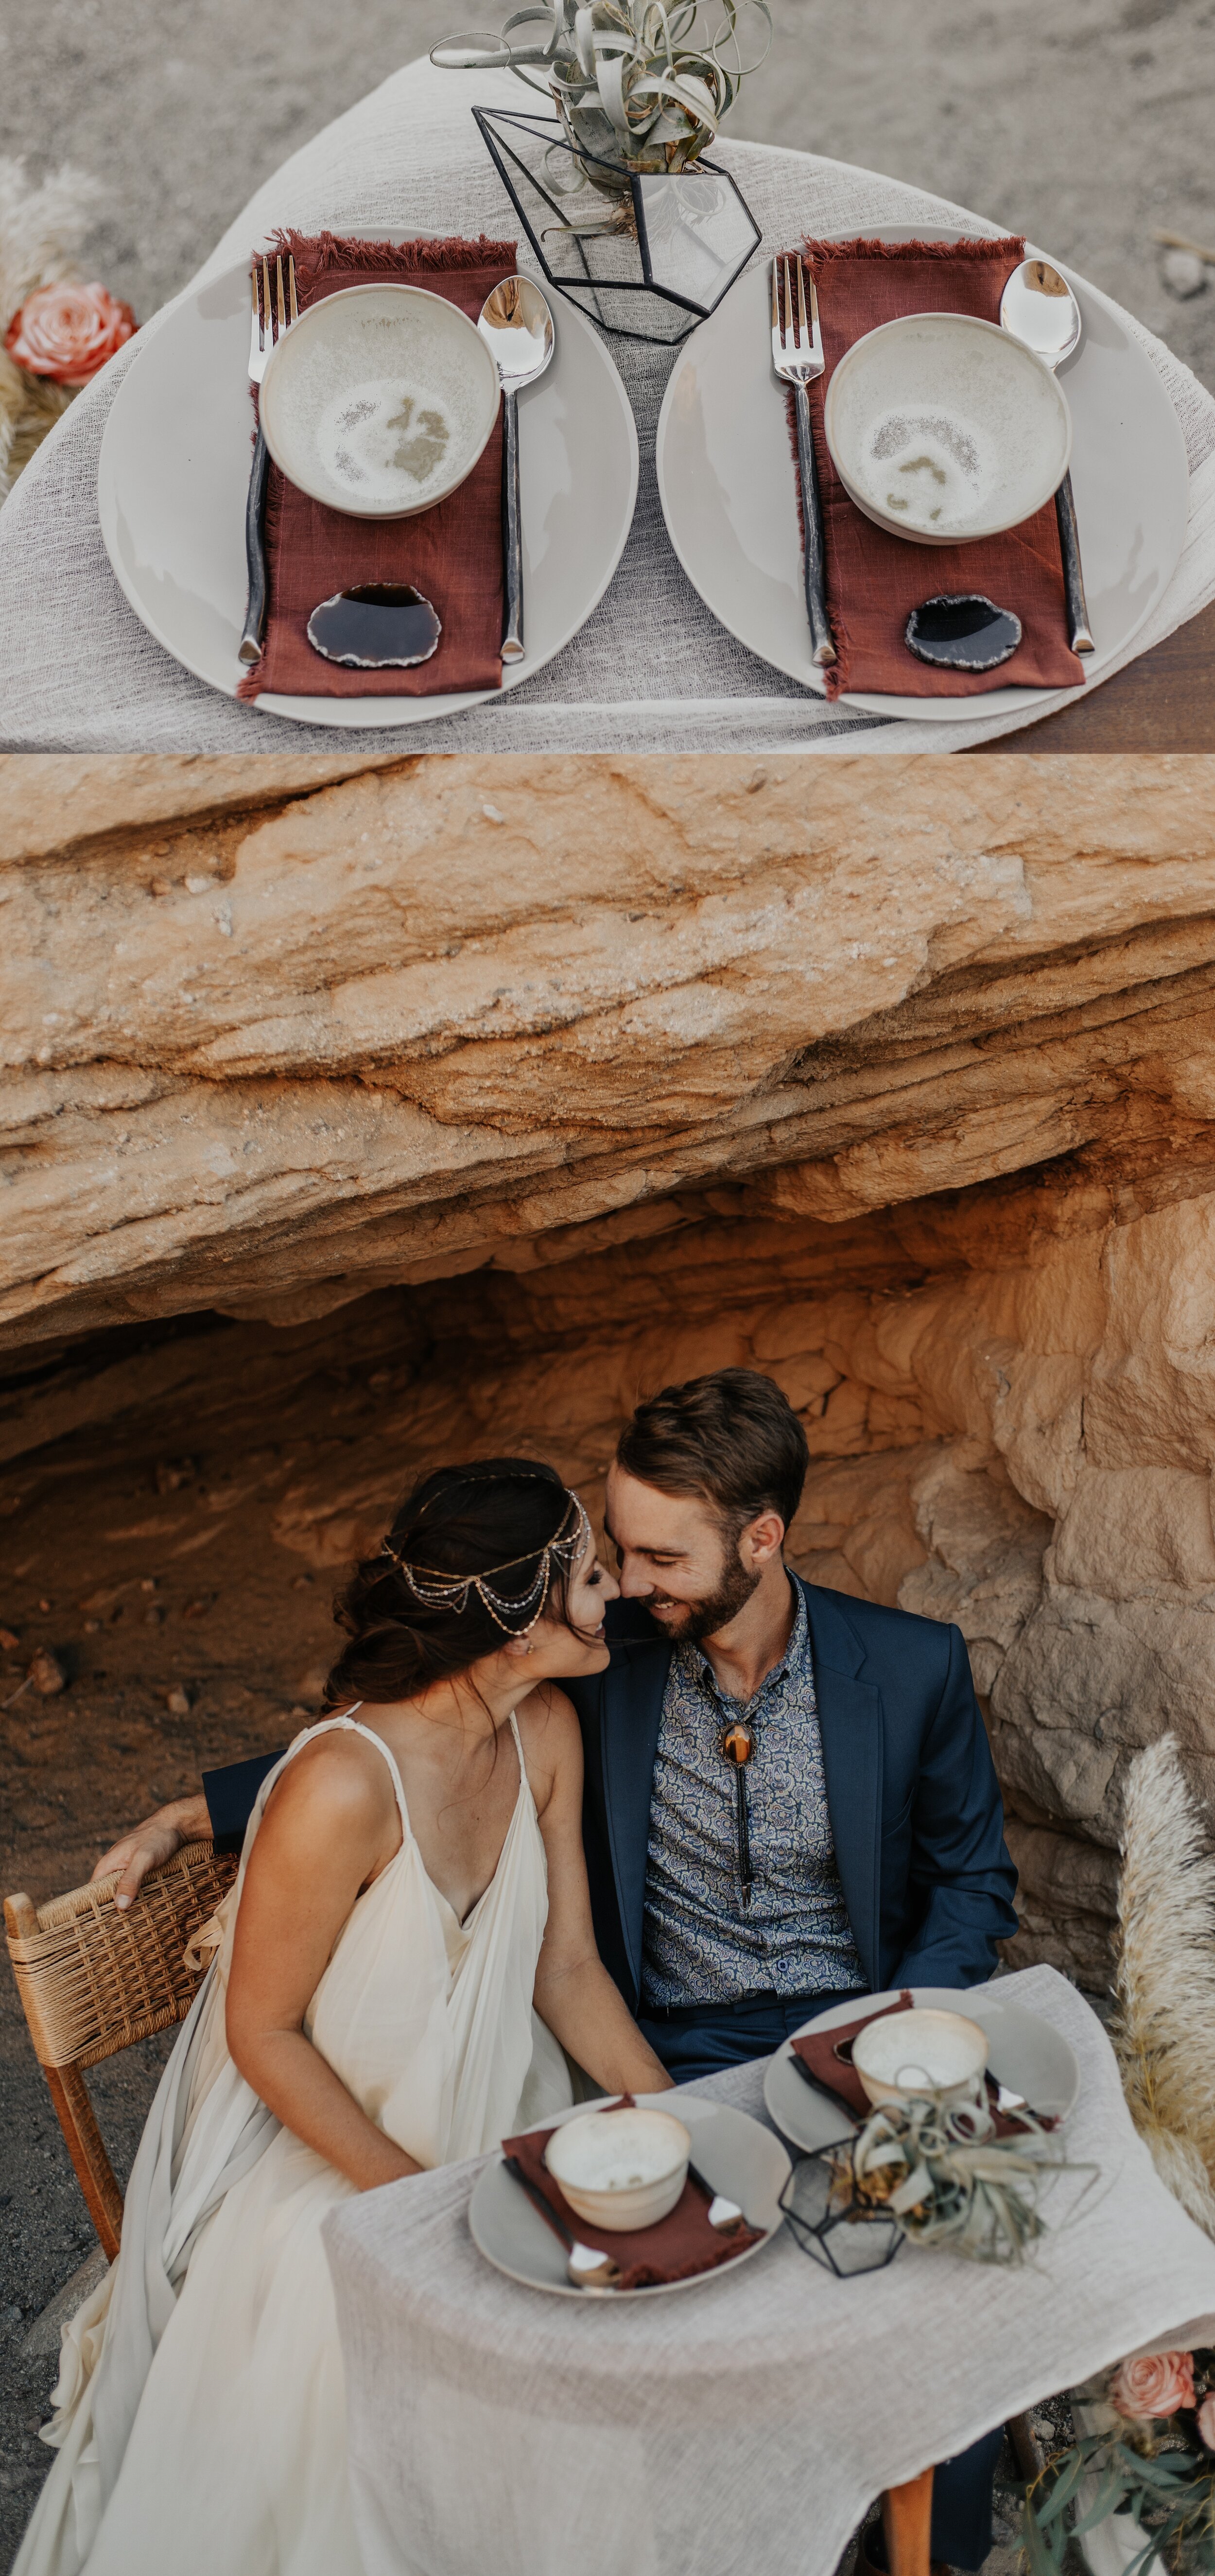 jessika-christine-photography-desert-elopement-couples-outdoor-adventurous-session (2).jpg